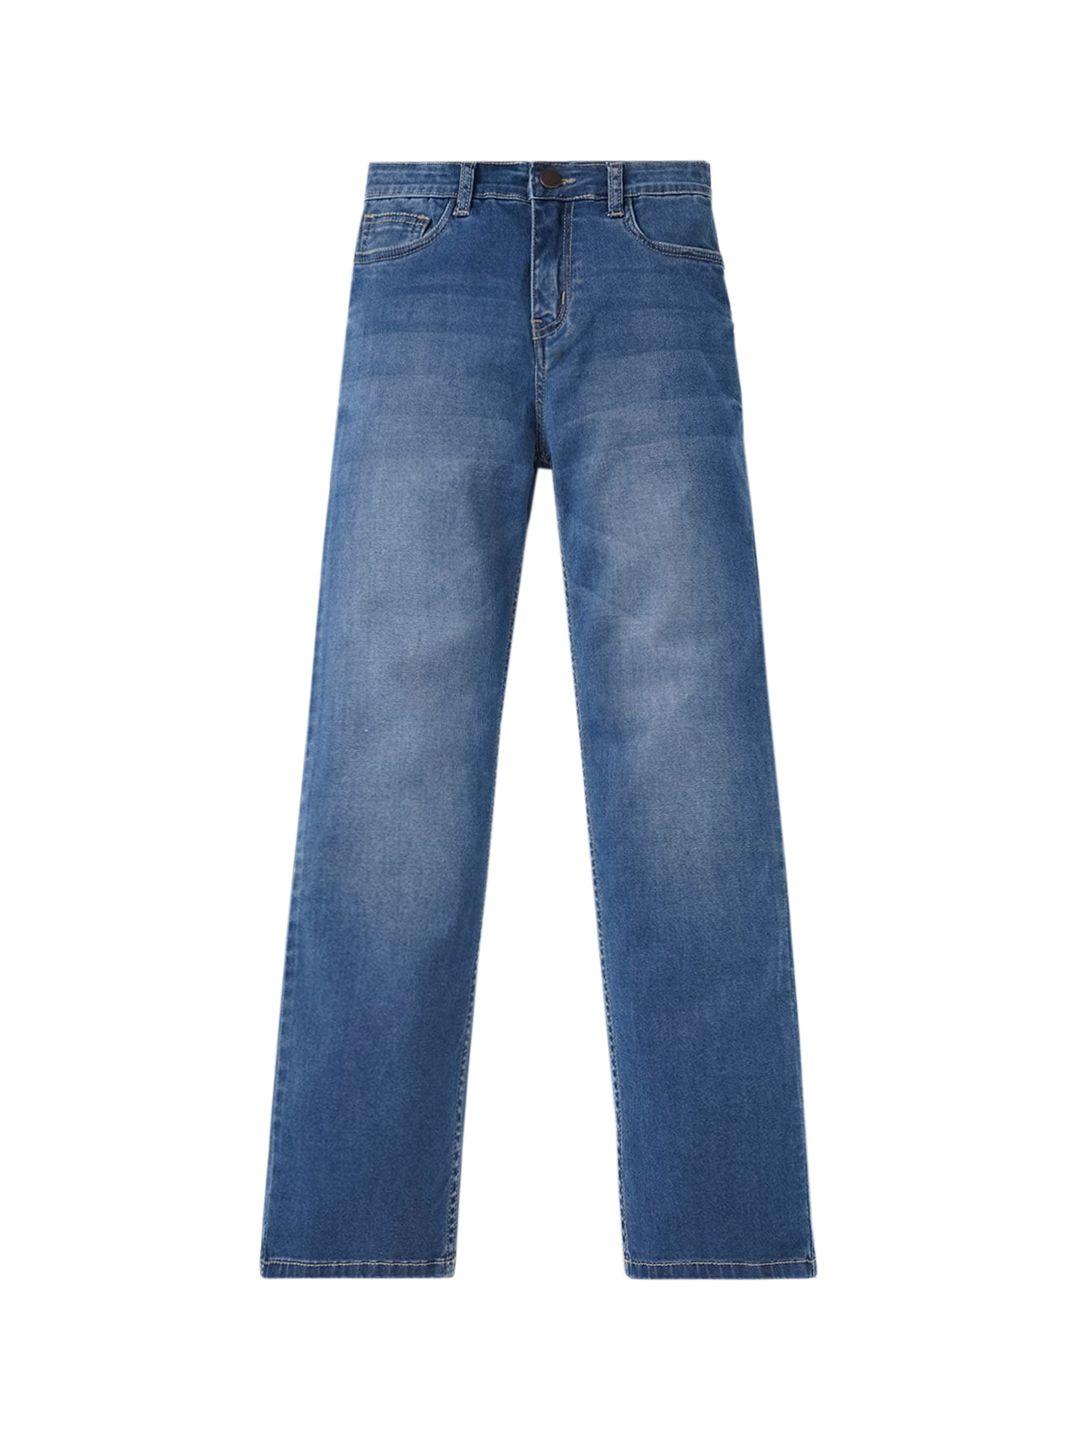 edheads boys light fade stretchable cotton jeans